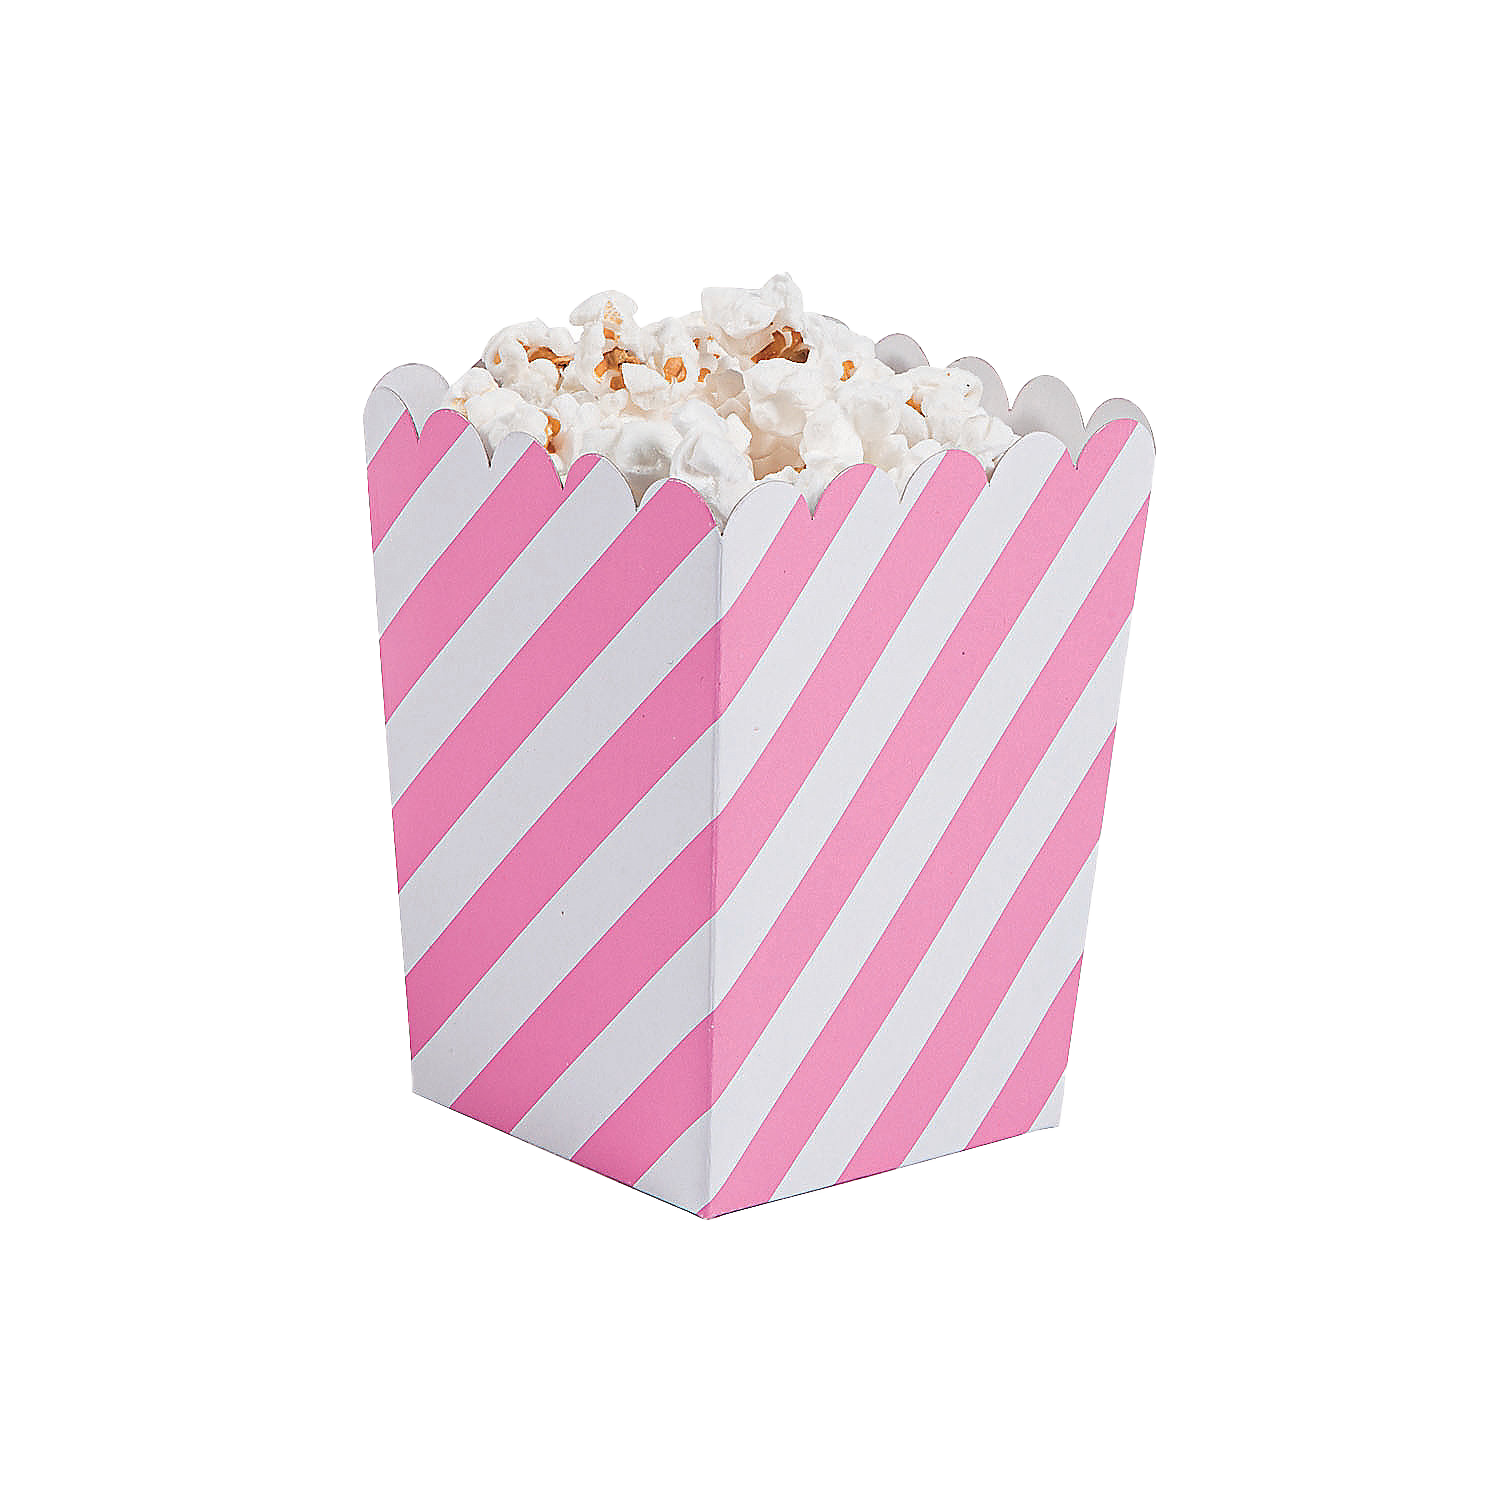 popcorn-nobackground